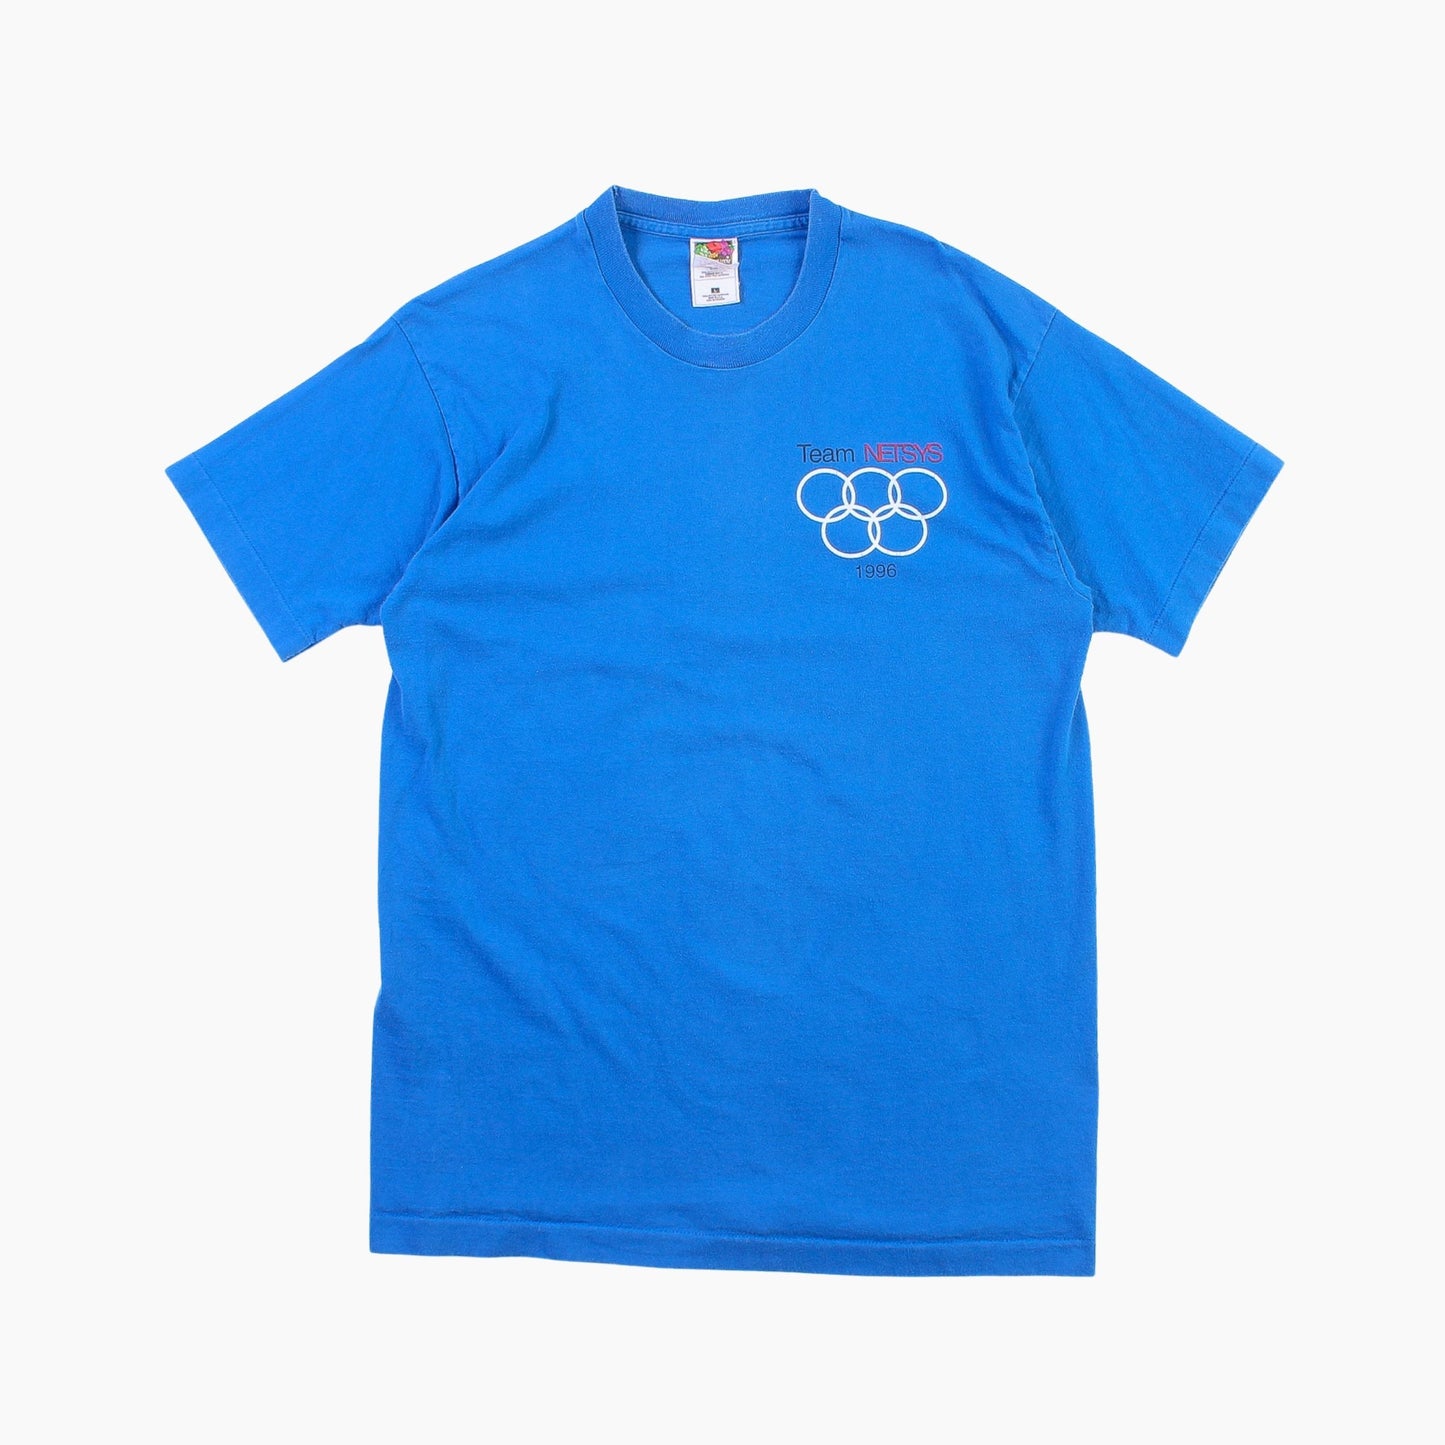 'Team Netsys 1996' T-Shirt - American Madness